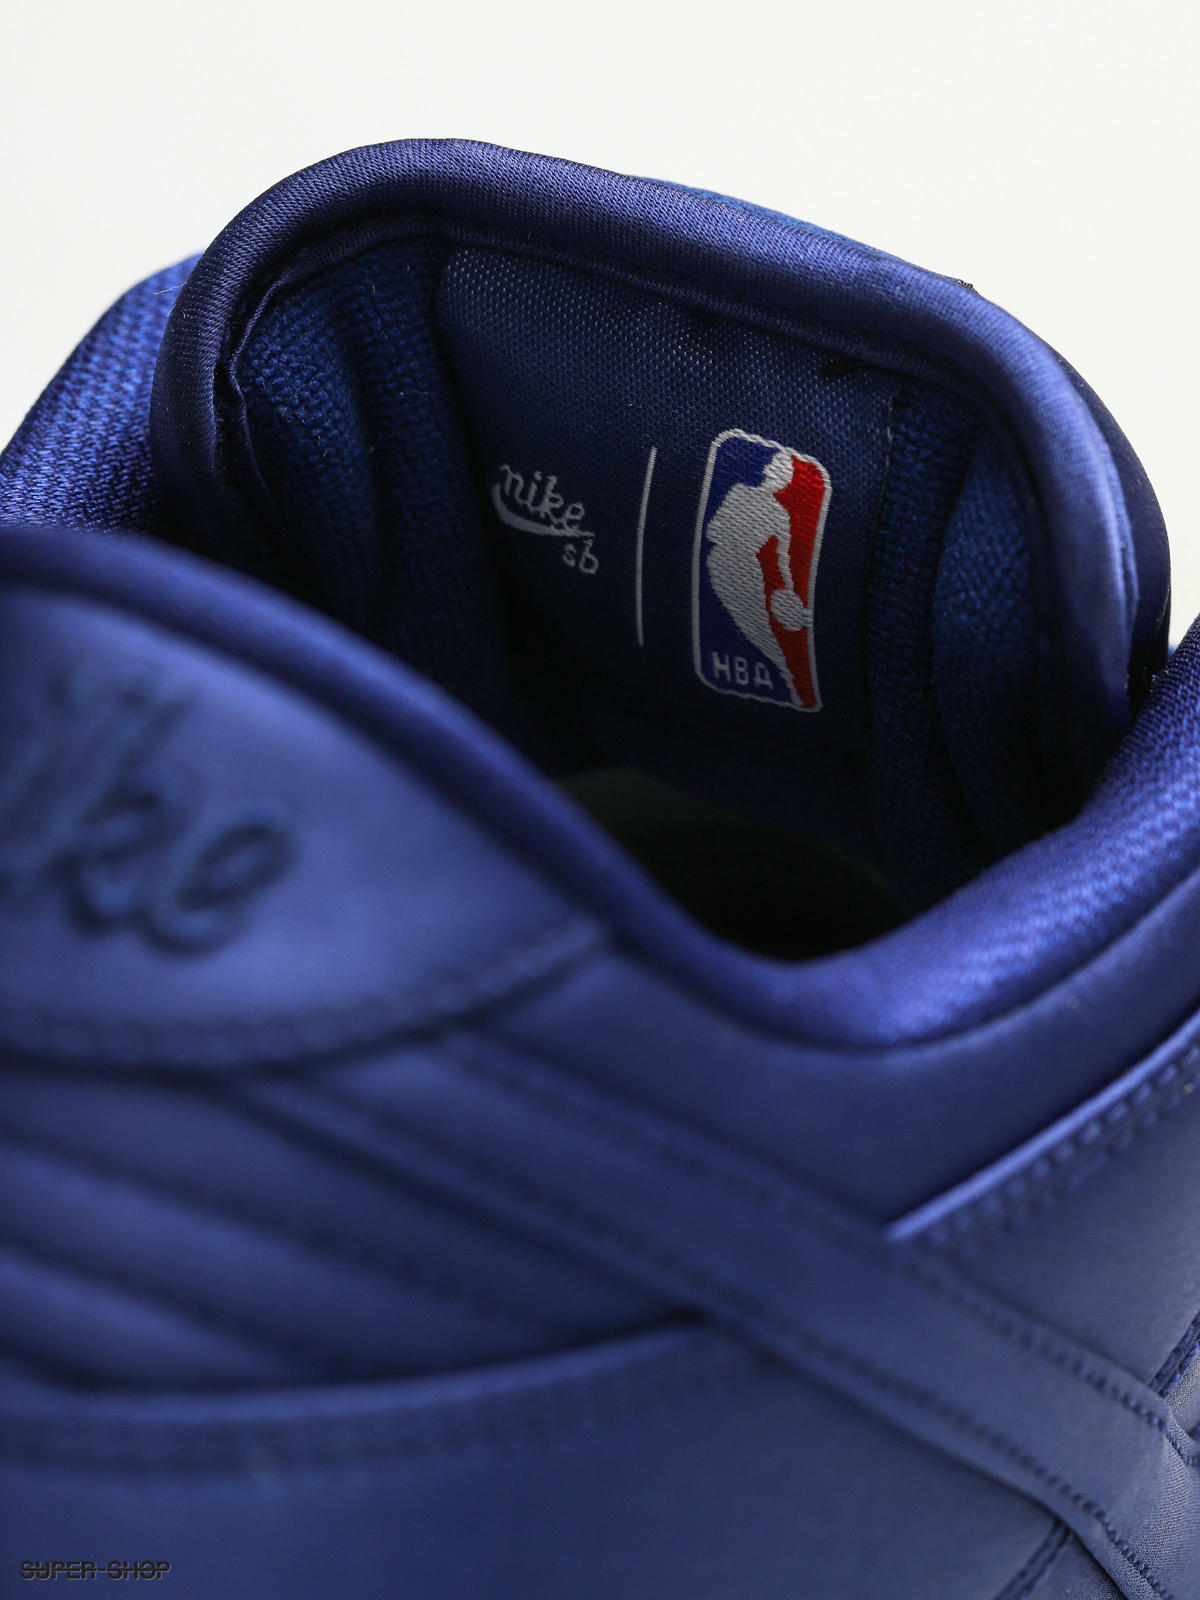 Nike SB Dunk Low TRD NBA (deep Royal Blue)